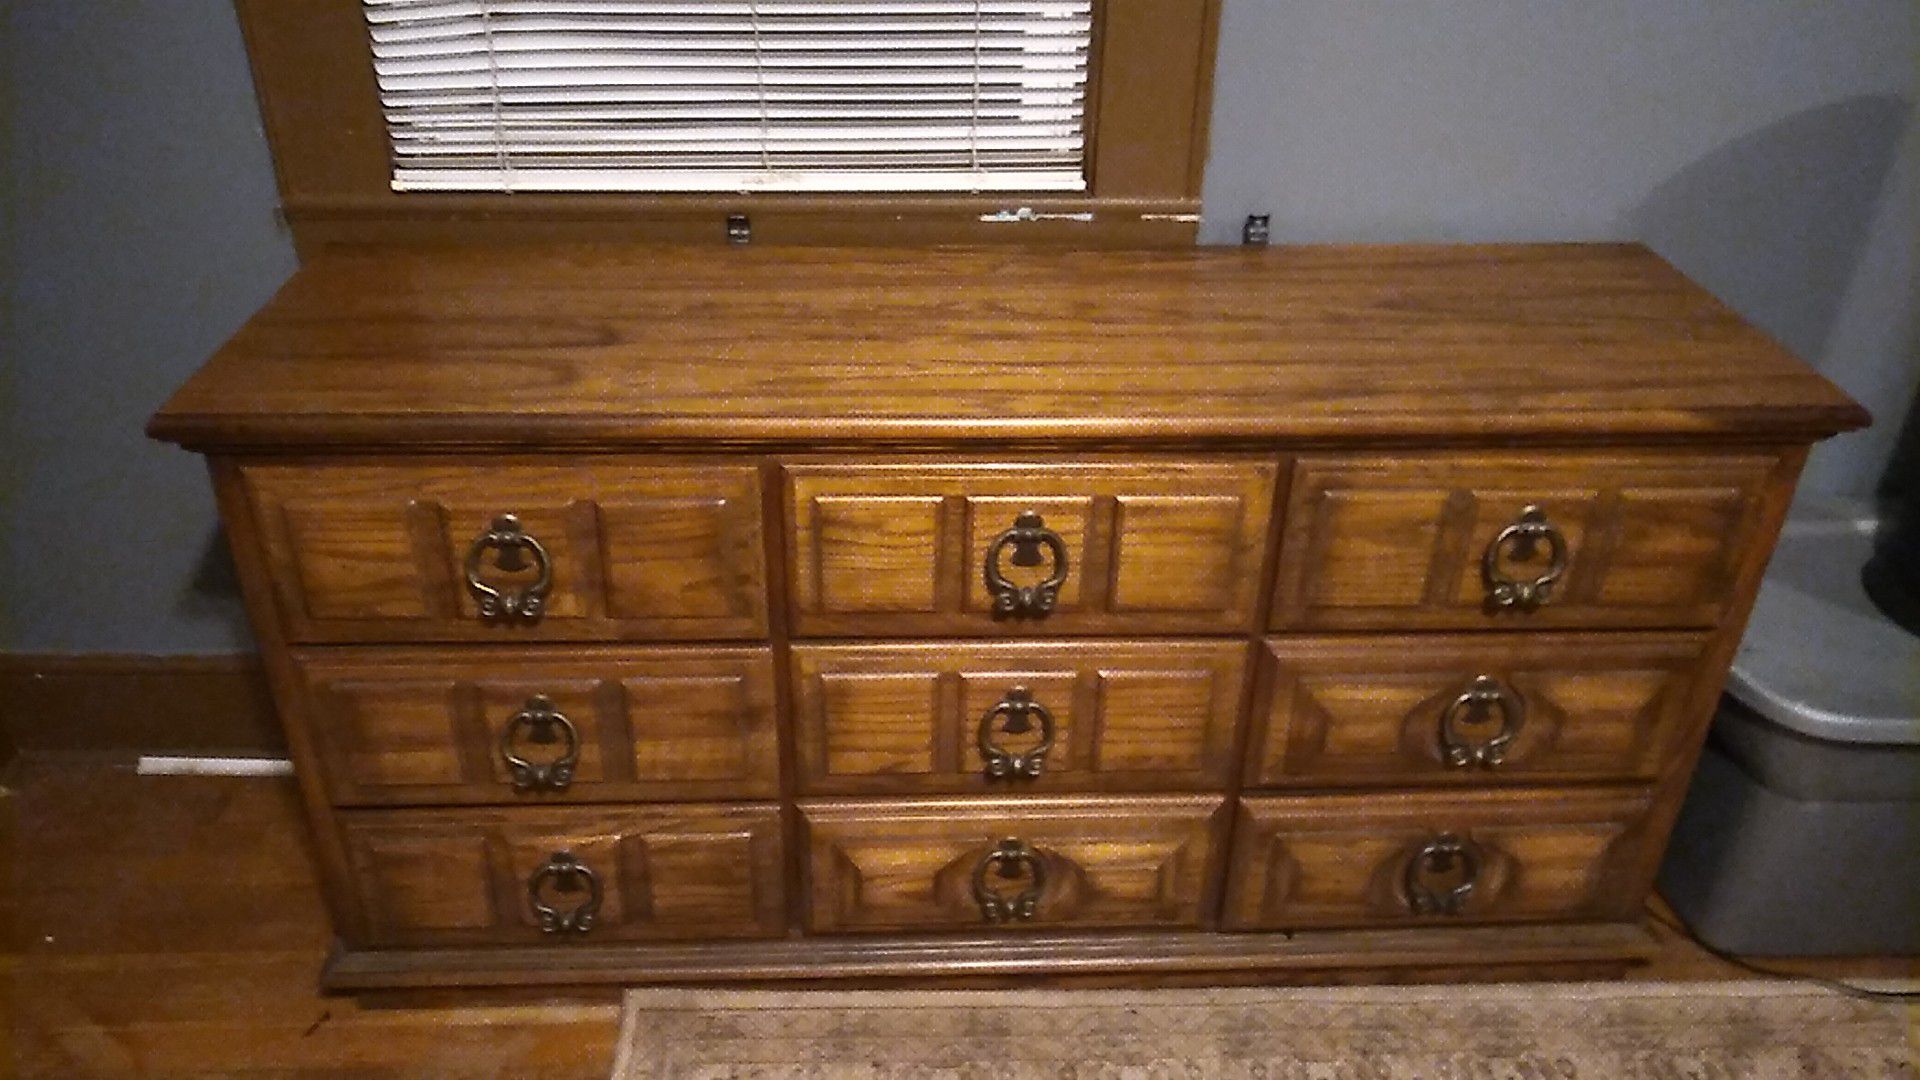 9 drawer dresser with vanity mirror. Mirror attaches to brackets on back